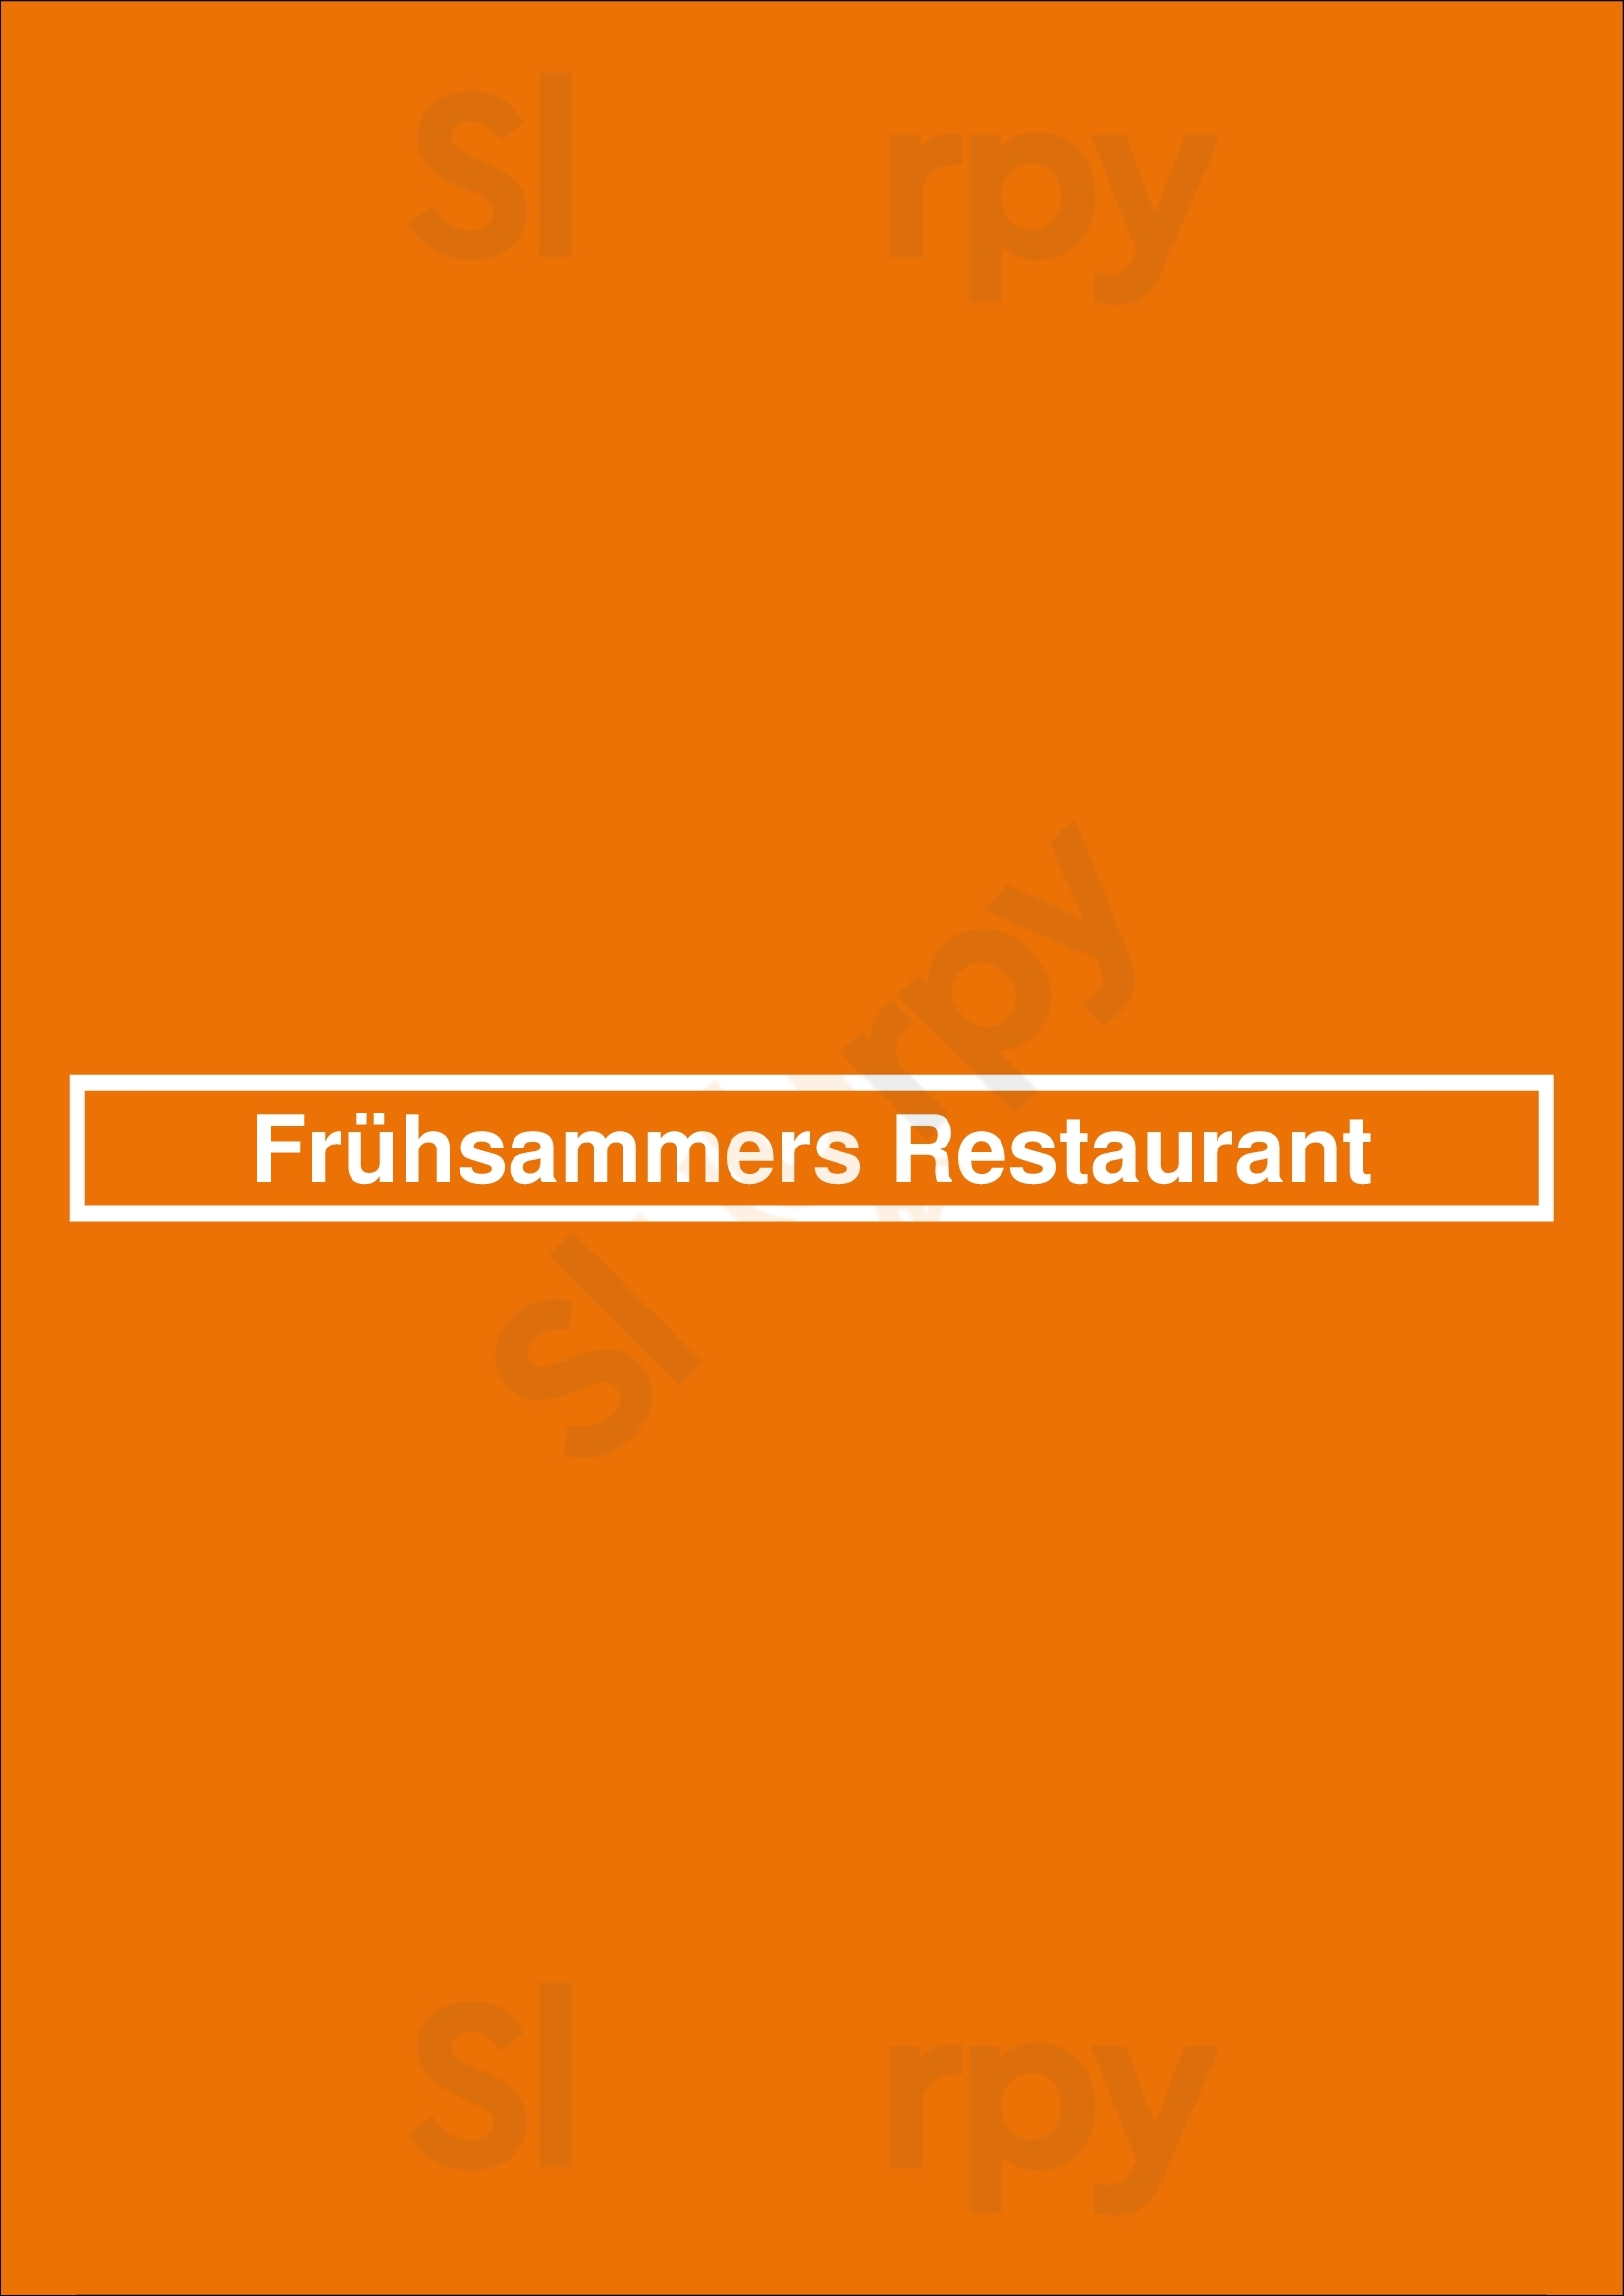 Frühsammers Restaurant Berlin Menu - 1